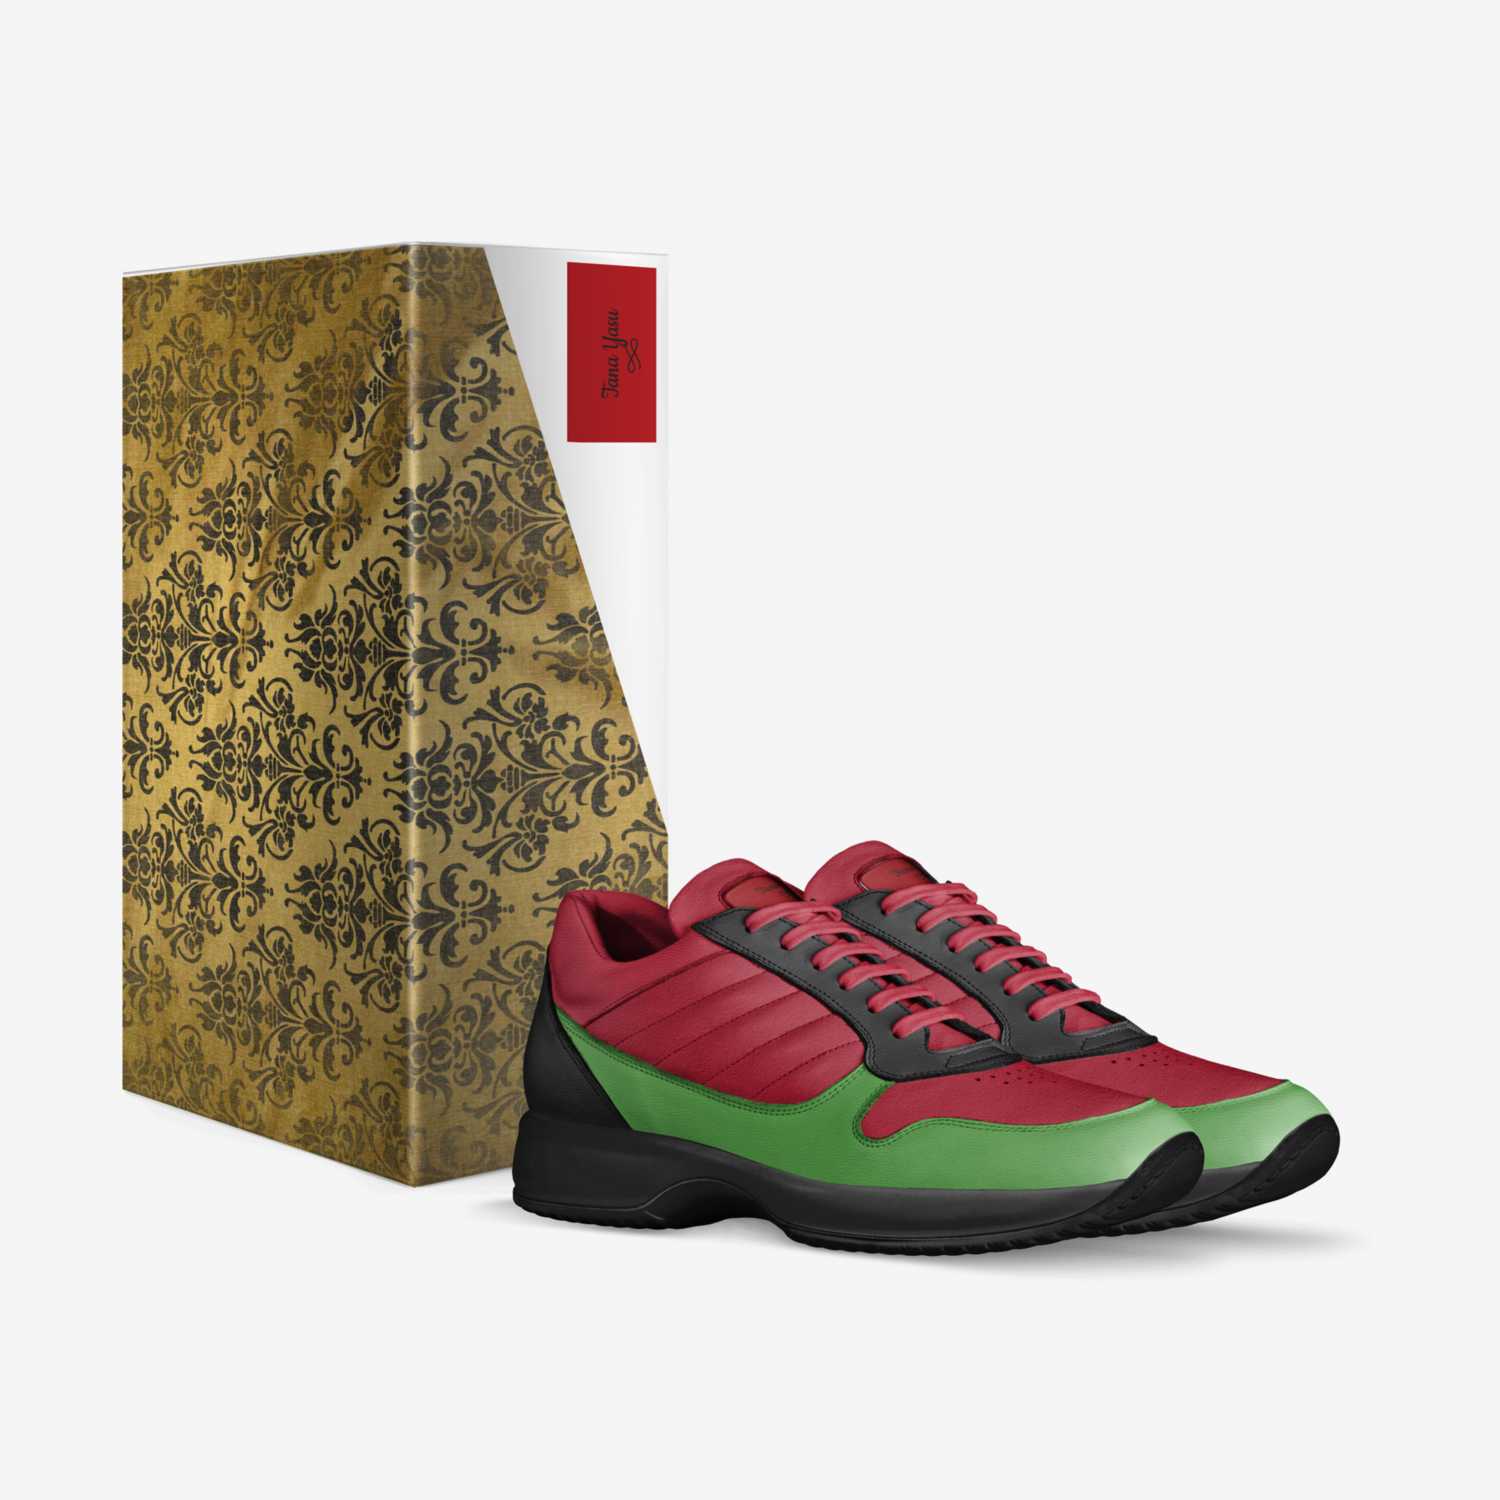 Tana Yasu custom made in Italy shoes by Tana Yasu | Box view